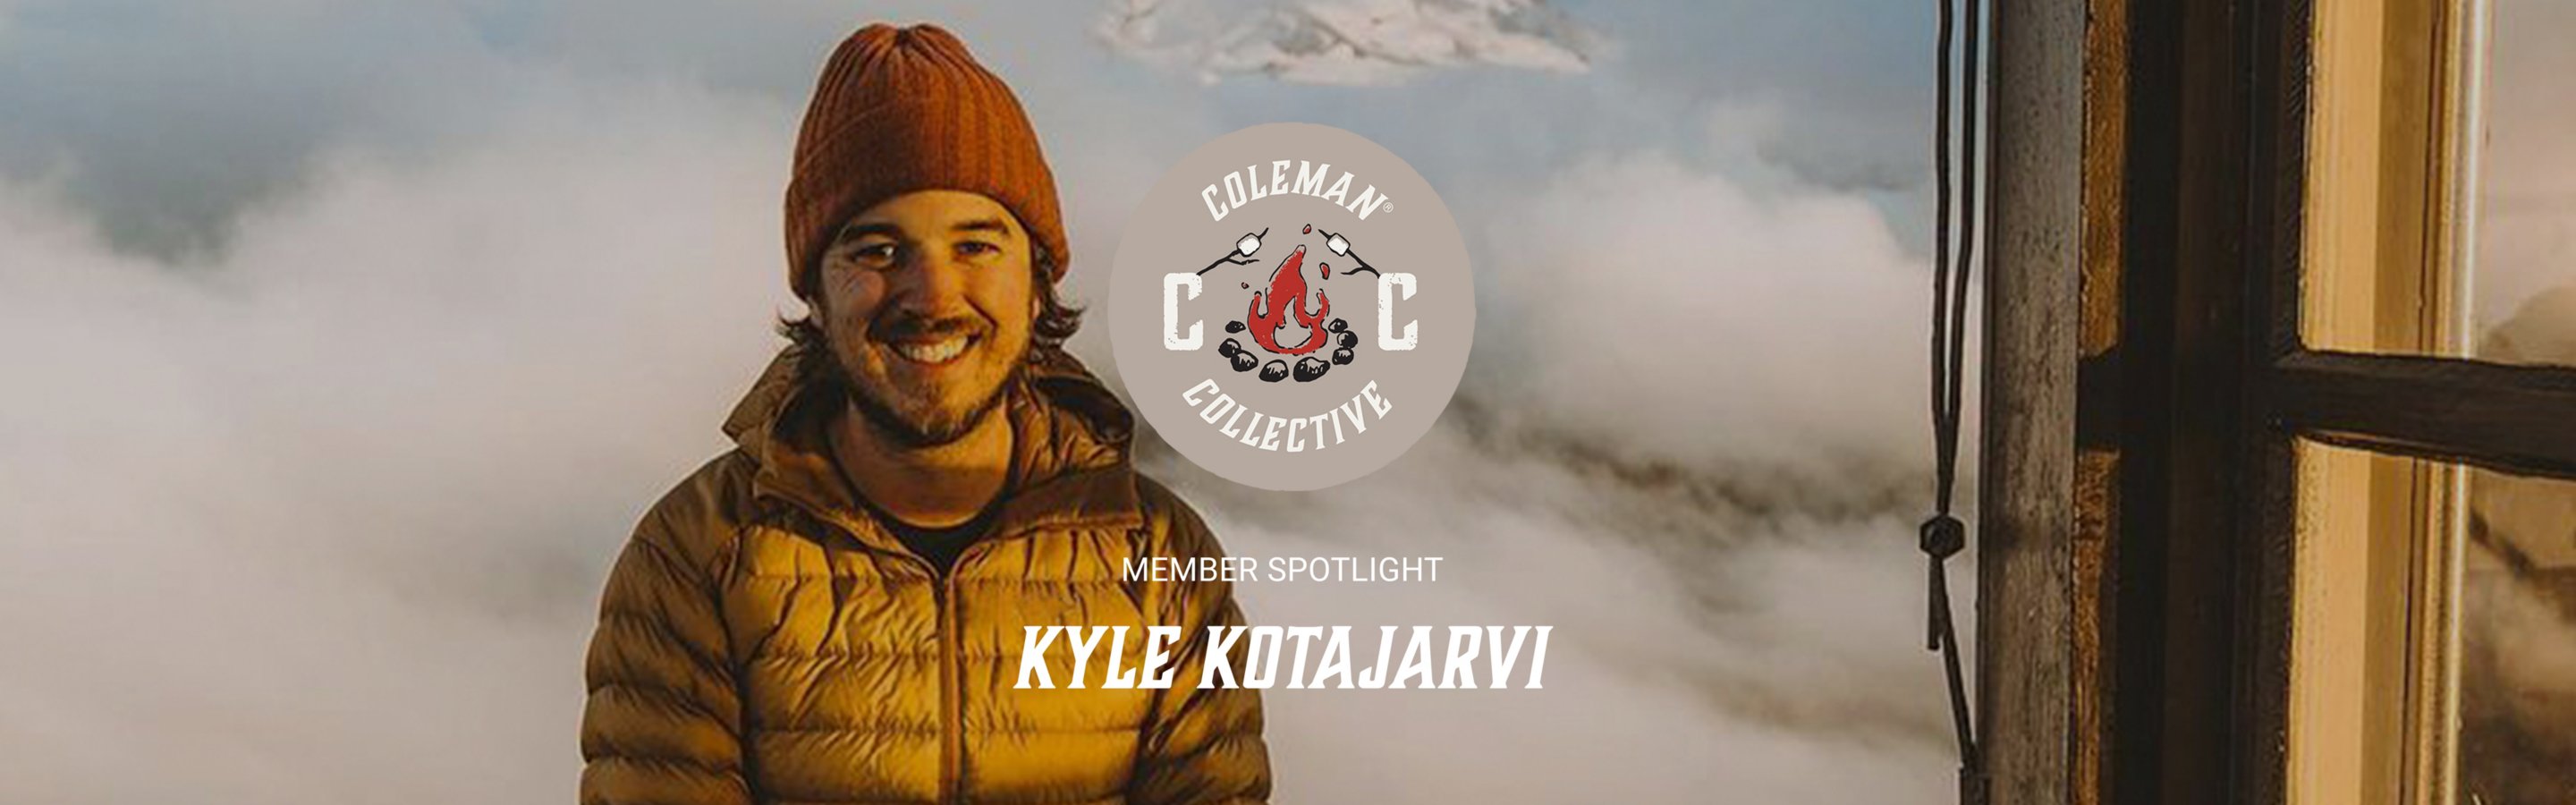 campfire collective member spotlight kyle kotajarvi